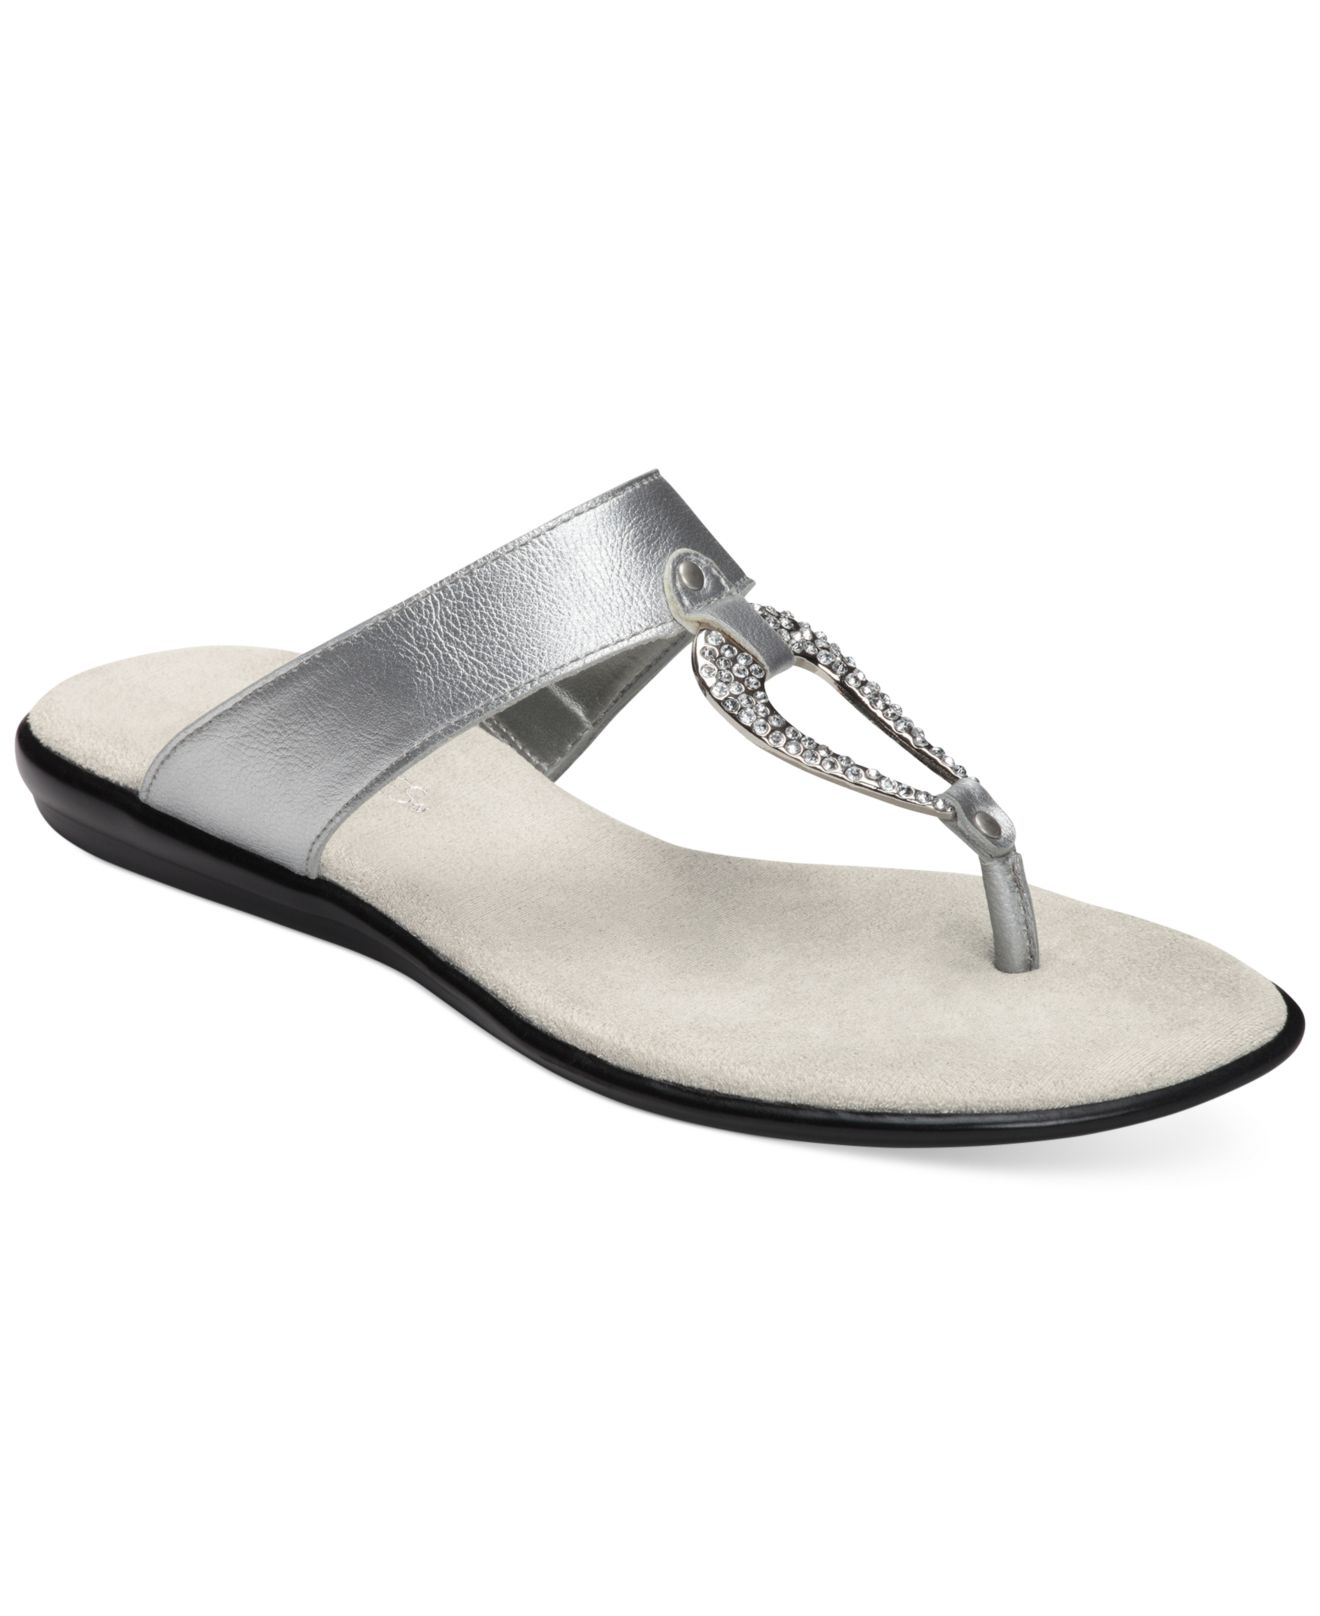 Aerosoles Bachelorette Flat Thong Sandals in Silver | Lyst